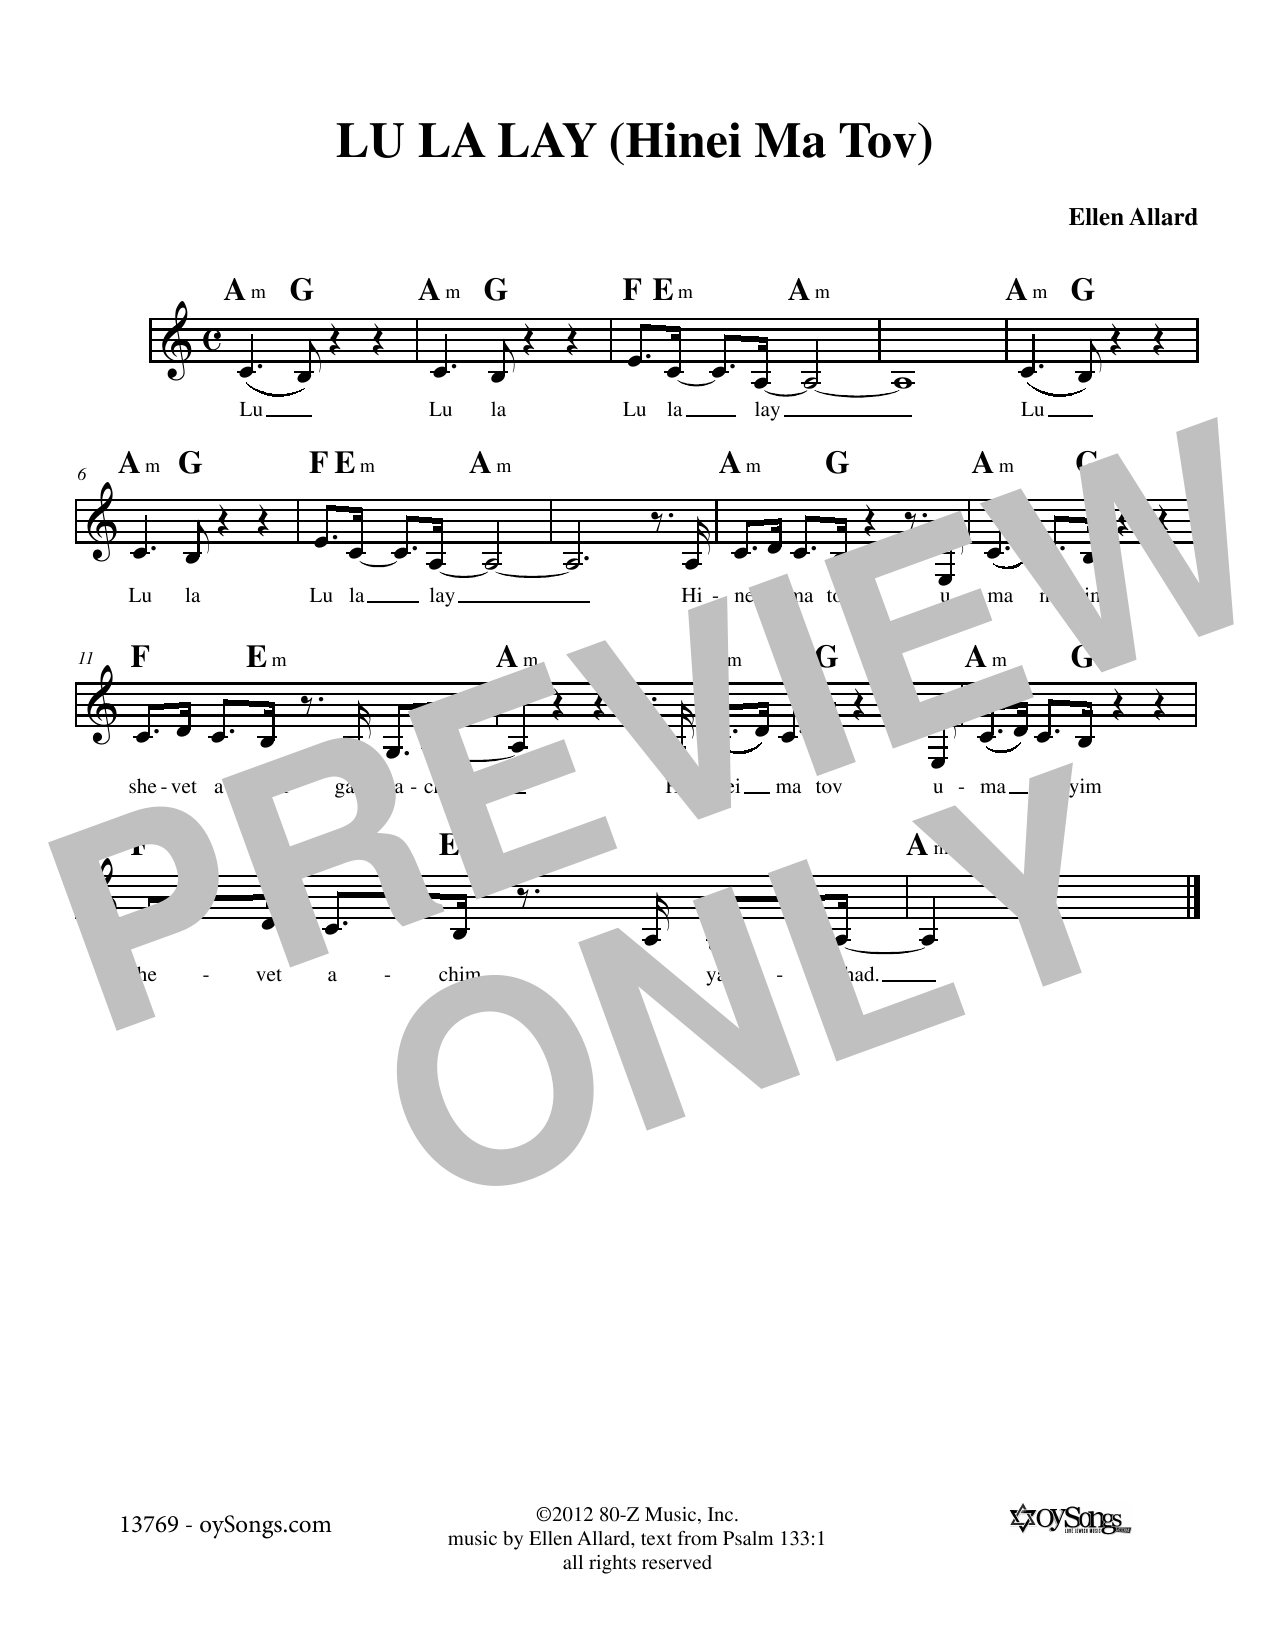 Download Ellen Allard Lu La Lay Hinei Ma Tov Sheet Music and learn how to play Melody Line, Lyrics & Chords PDF digital score in minutes